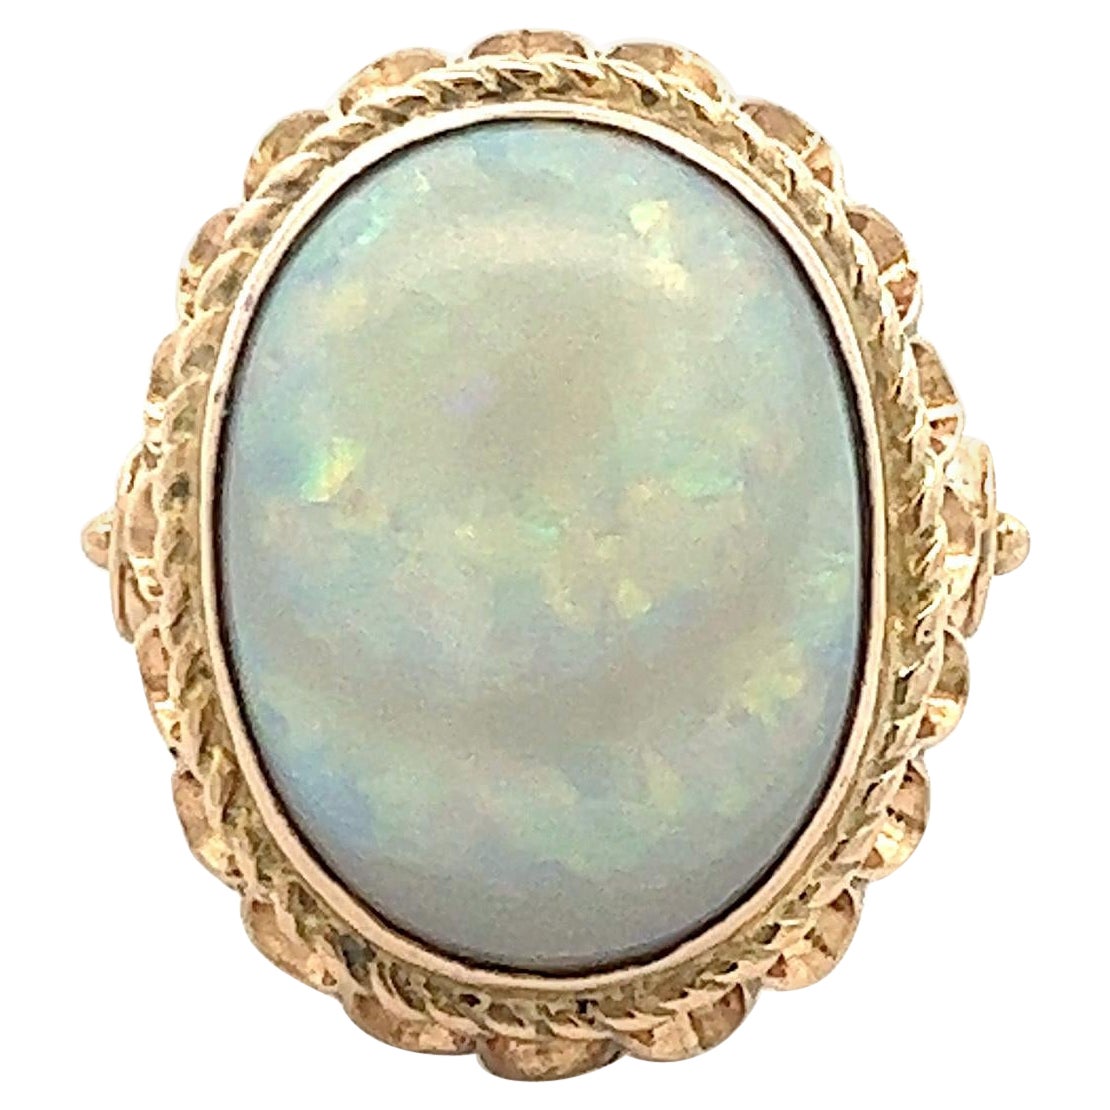 14k Ethiopian Opal Ring